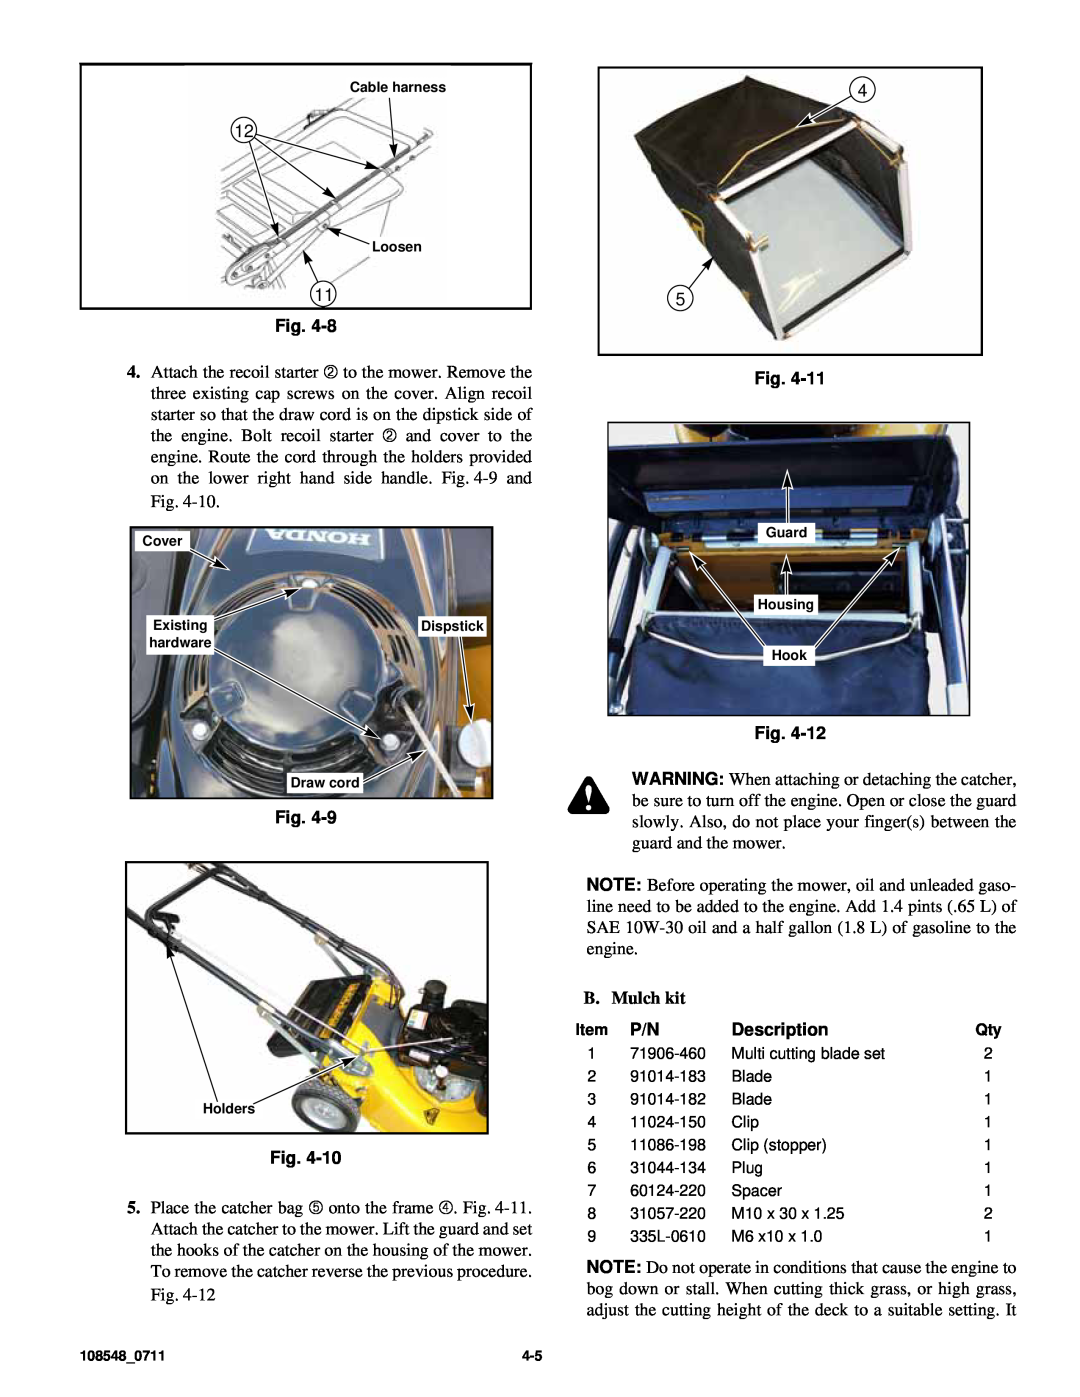 Hustler Turf M1 owner manual Mulch kit, Description 